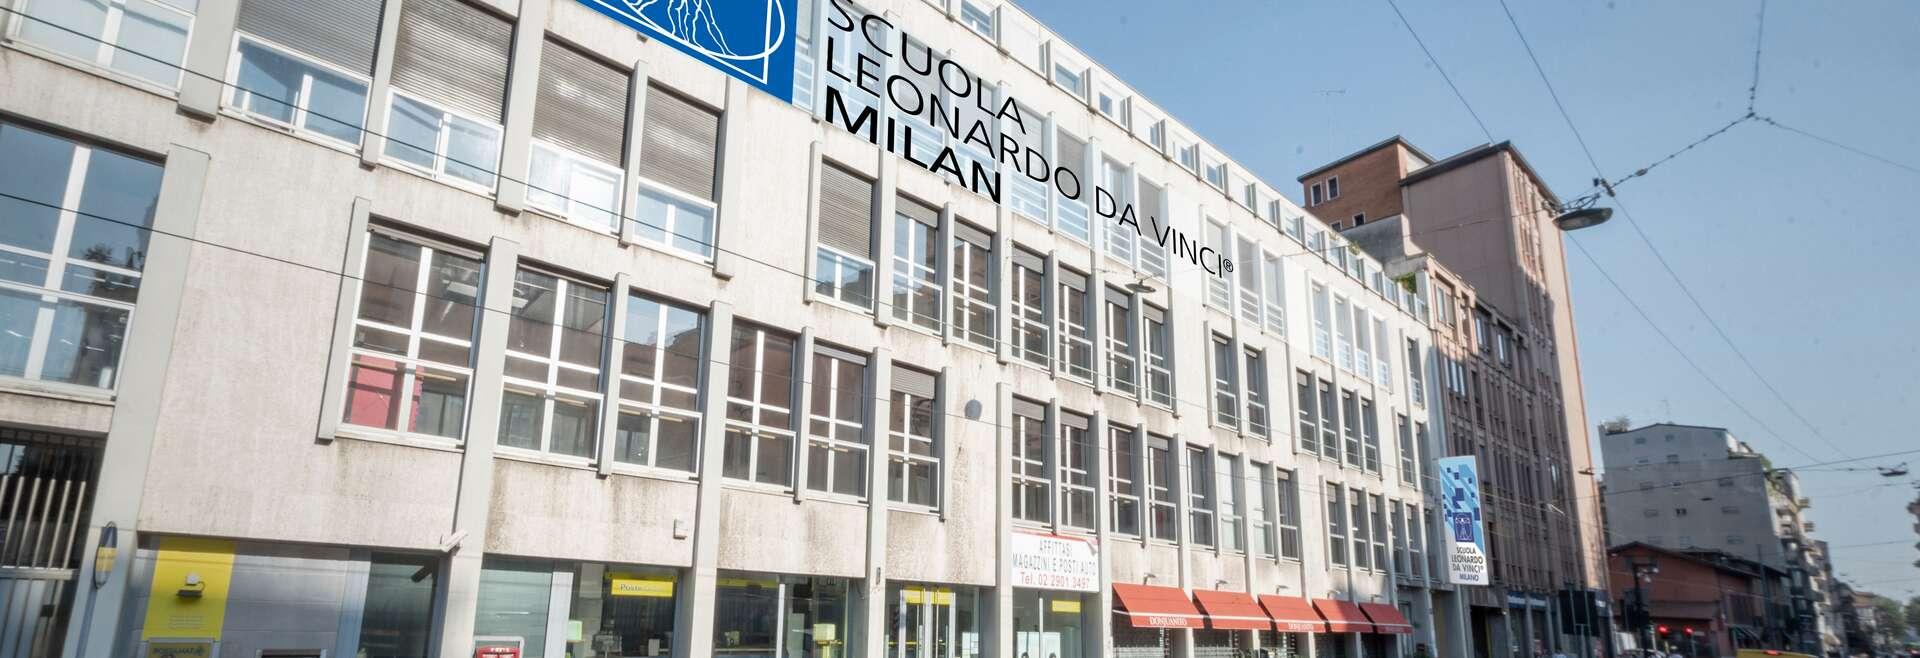 Sprachaufenthalt Italien, Milano - Scuola Leonardo da Vinci Milano - Schule